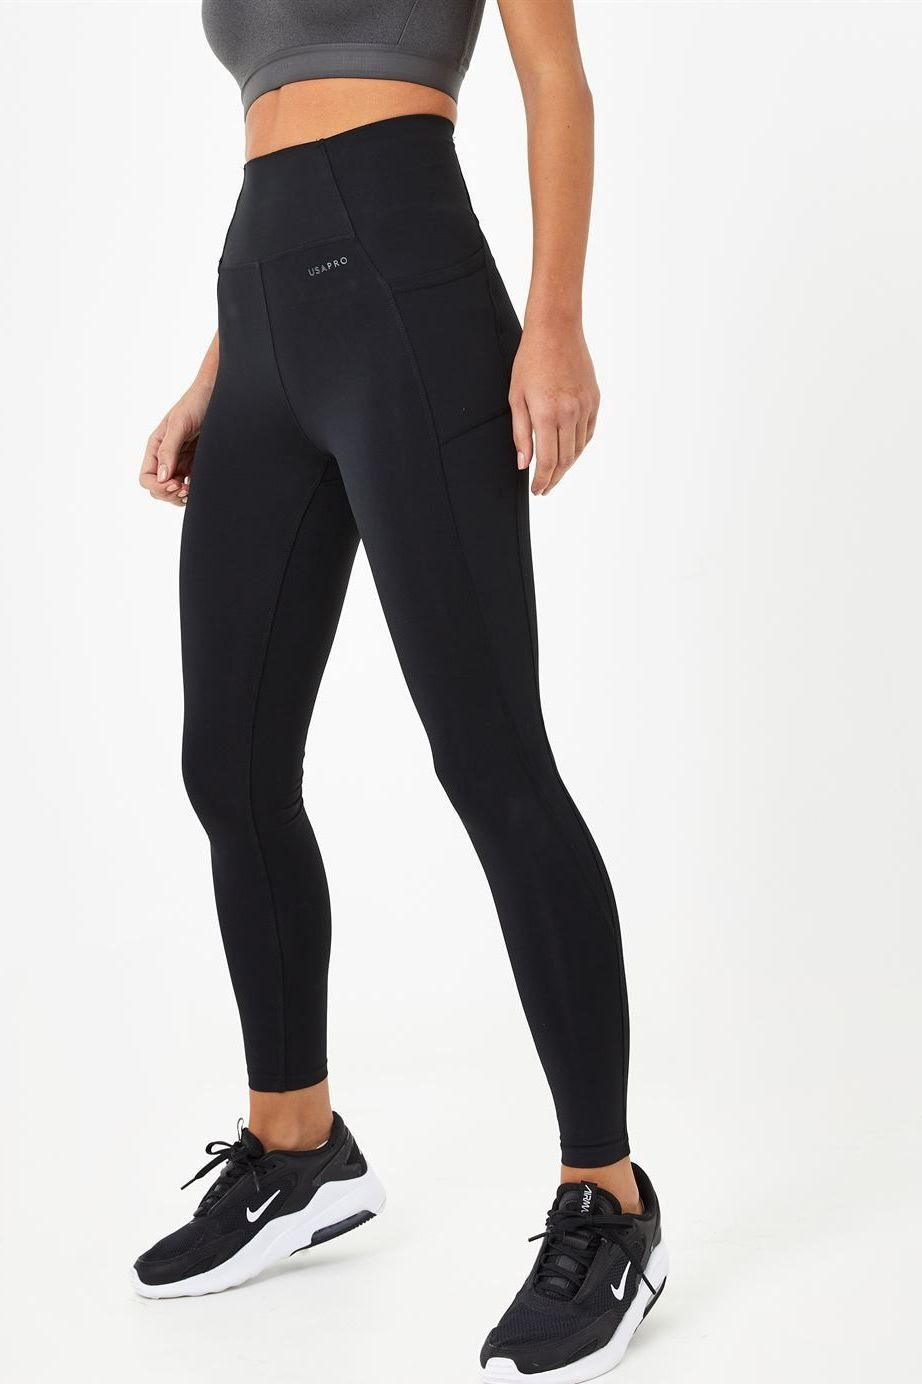 USA Pro Womens Seamless Ombre Leggings Yoga Pants Black/Grey 6